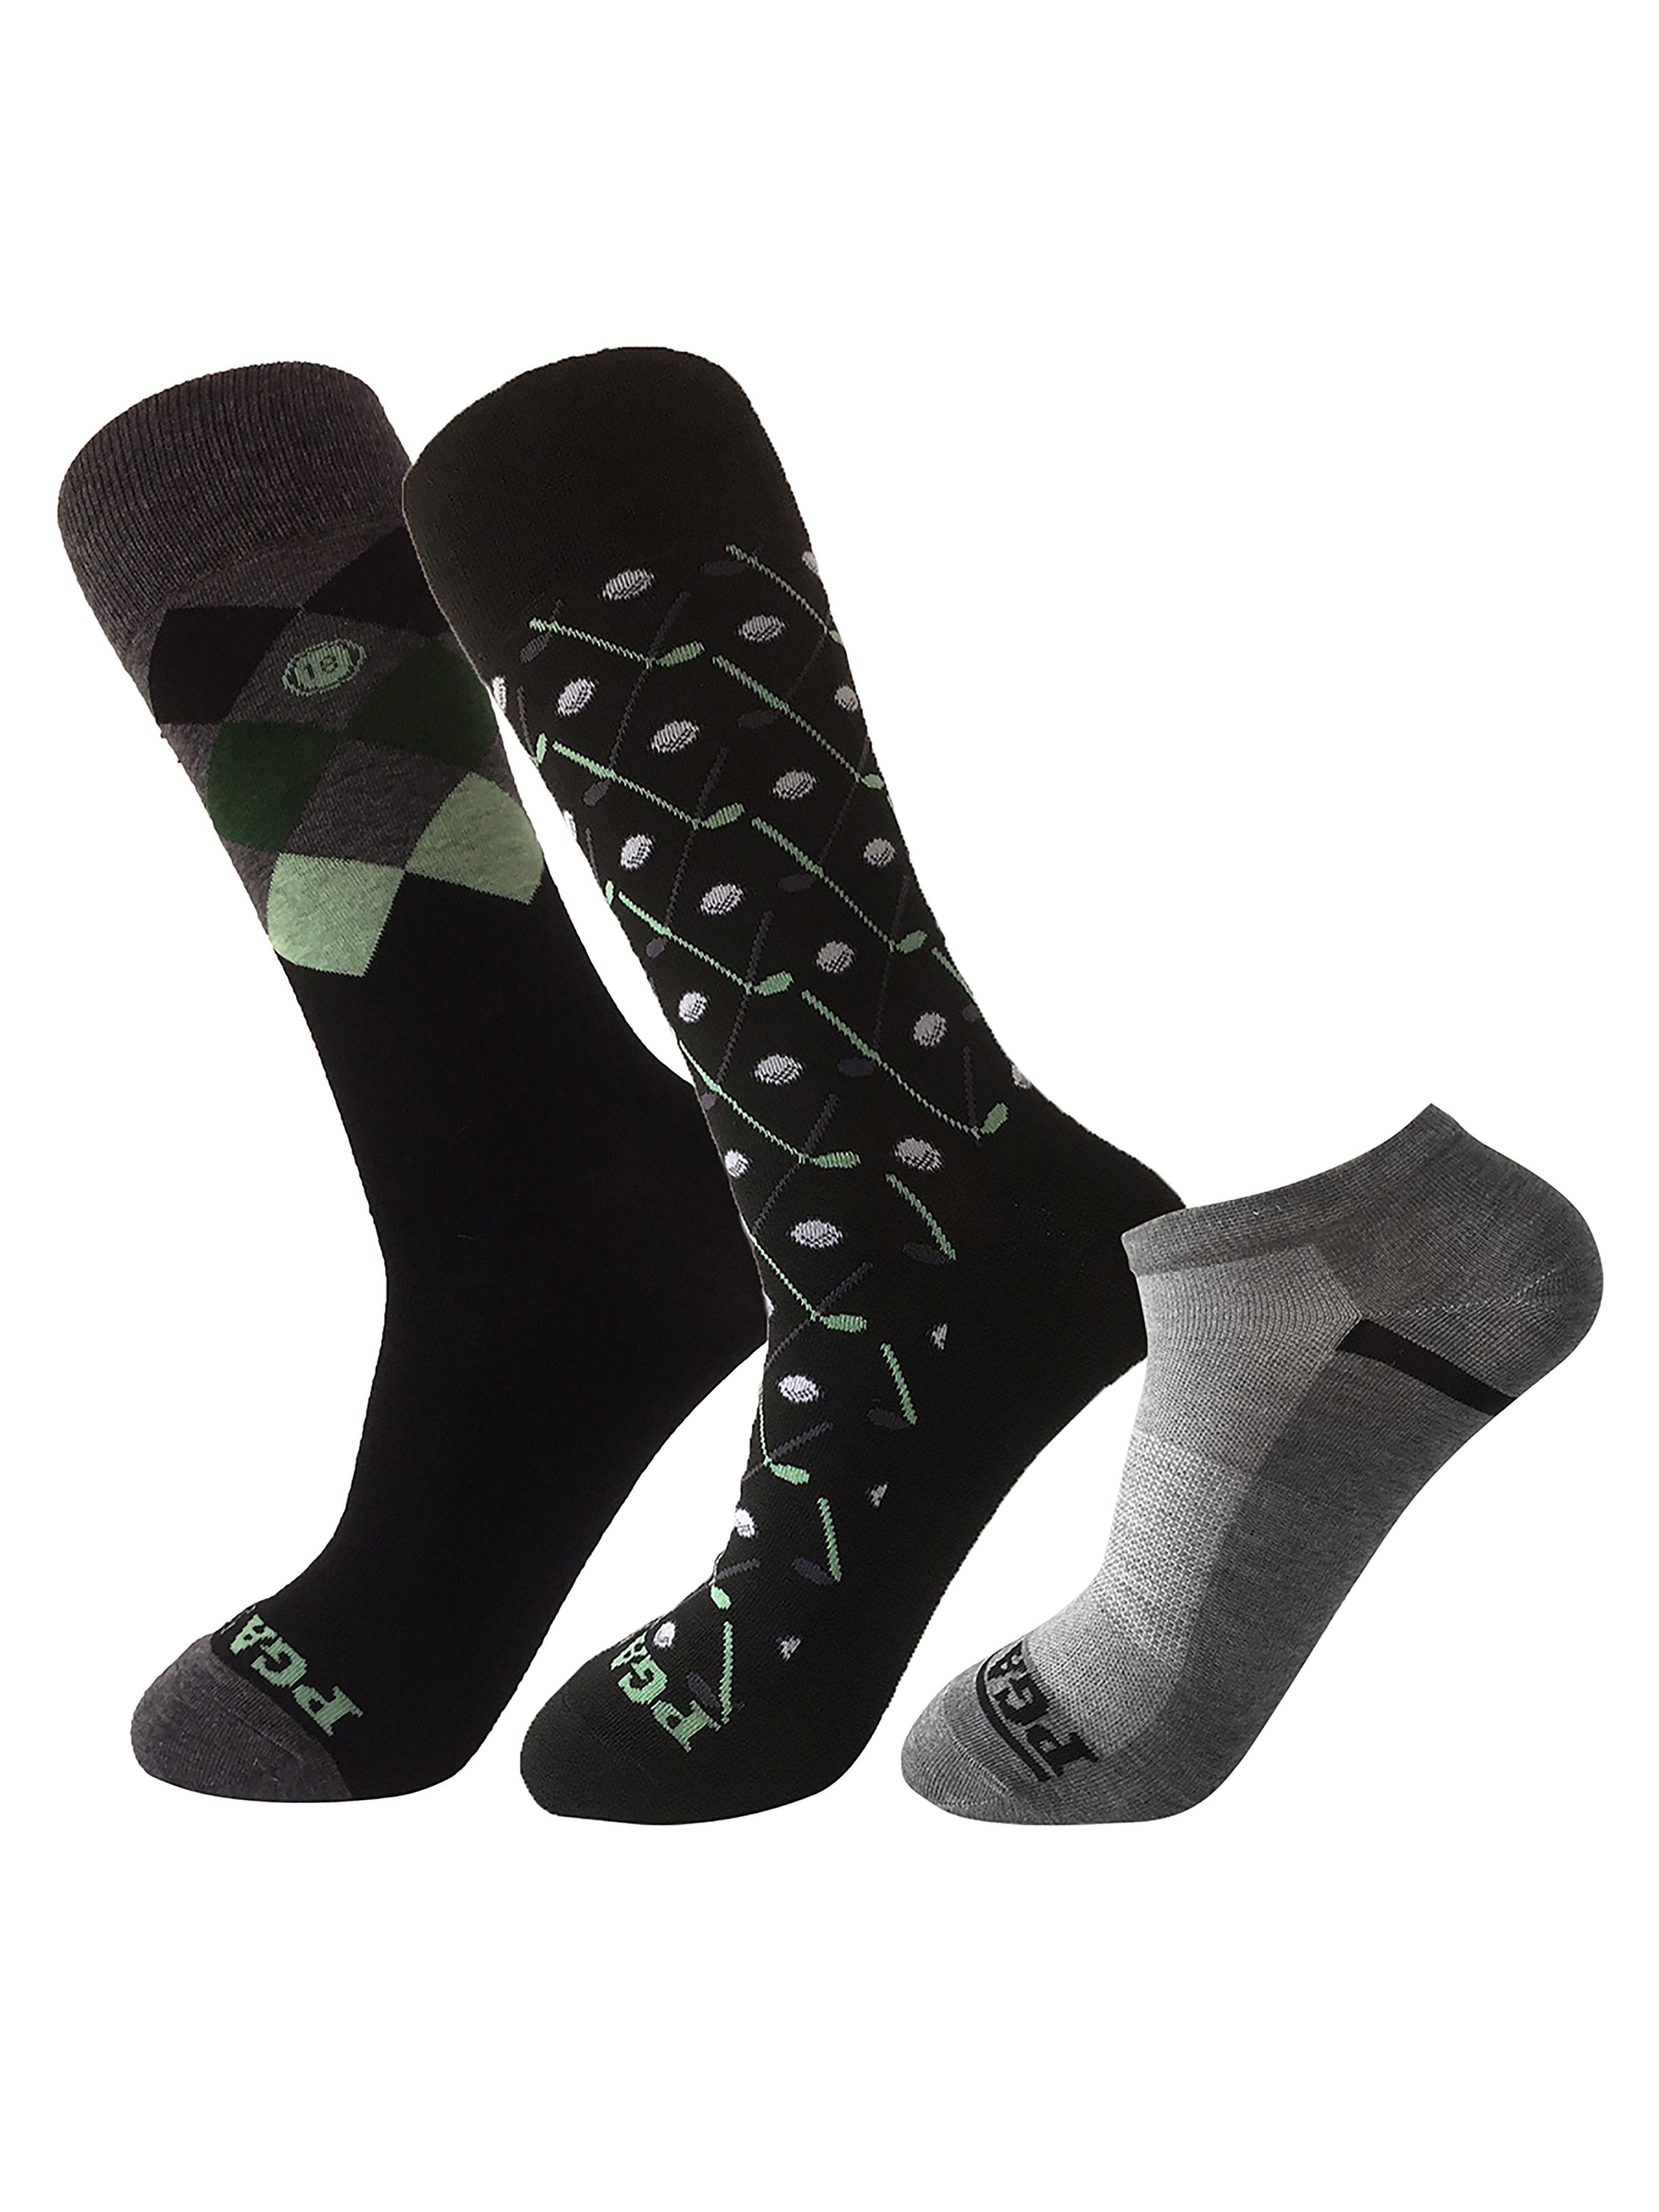 PGA TOUR Apparel Mens 3-Pack Socks Gift Set, Green | Golf Apparel Shop